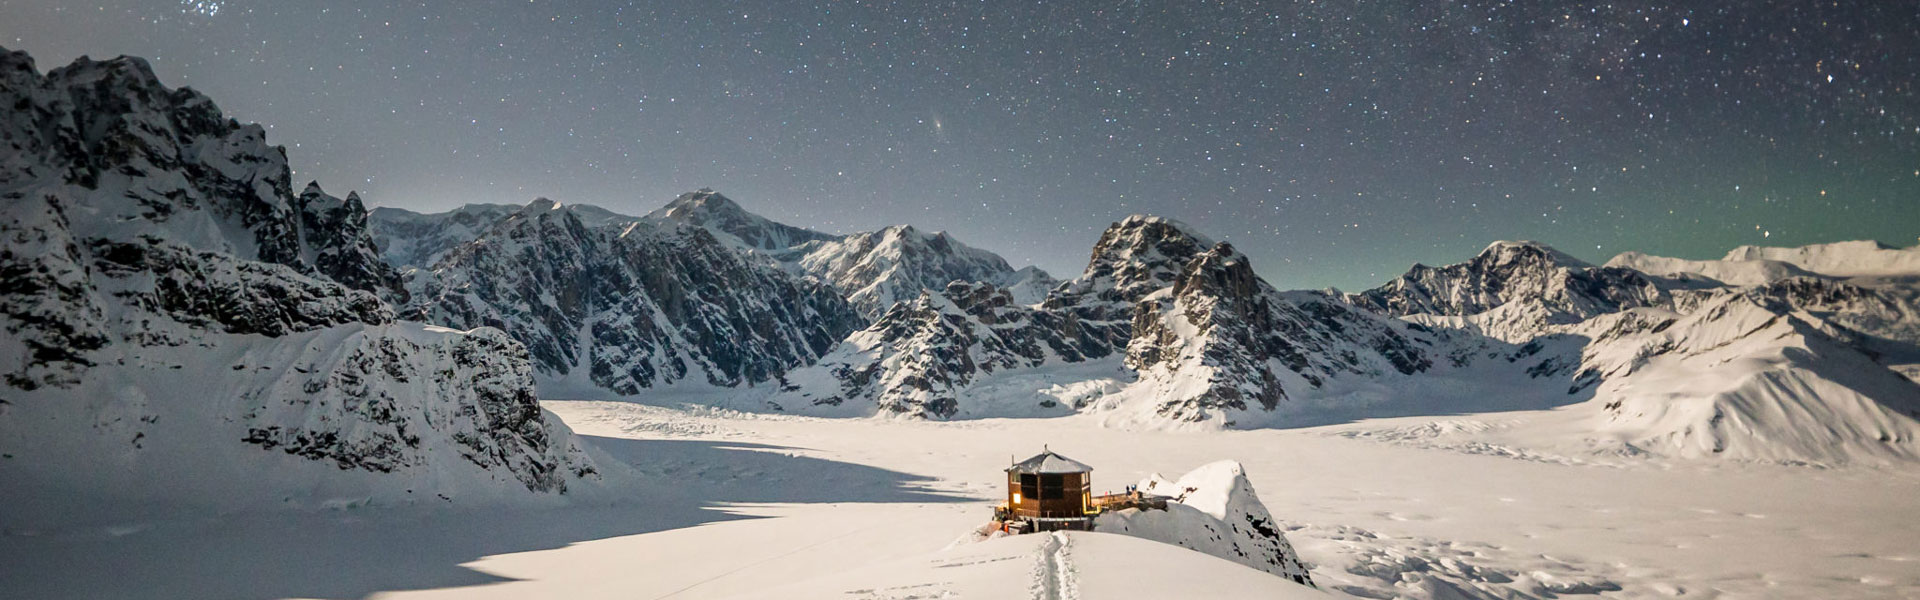 Alaska Luxury Wilderness Lodges | Sheldon Chalet on Denali